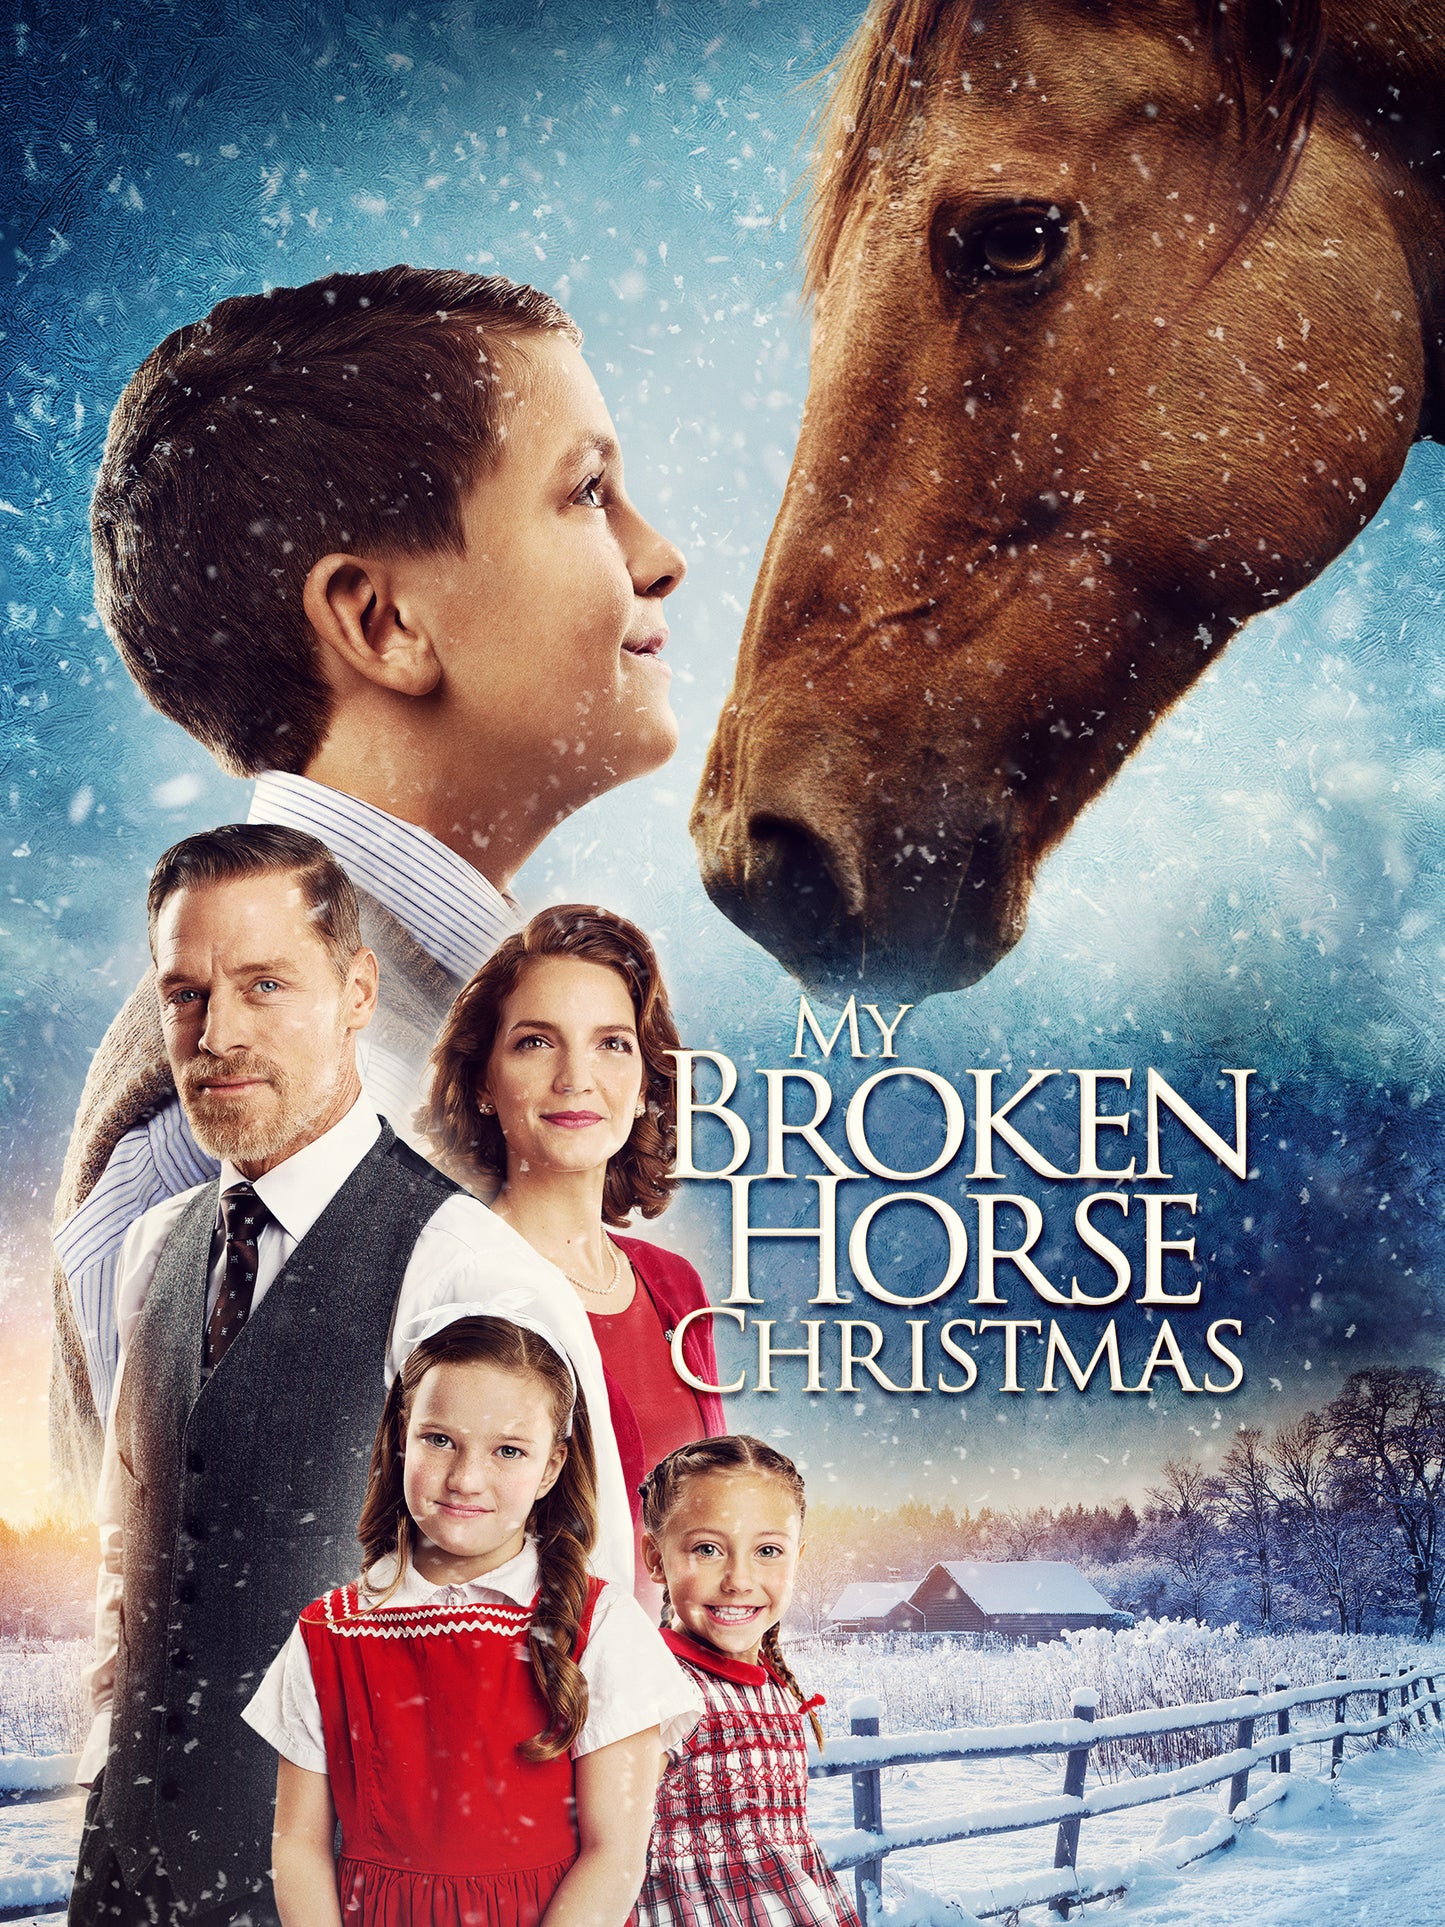 My Broken Horse Christmas cover art